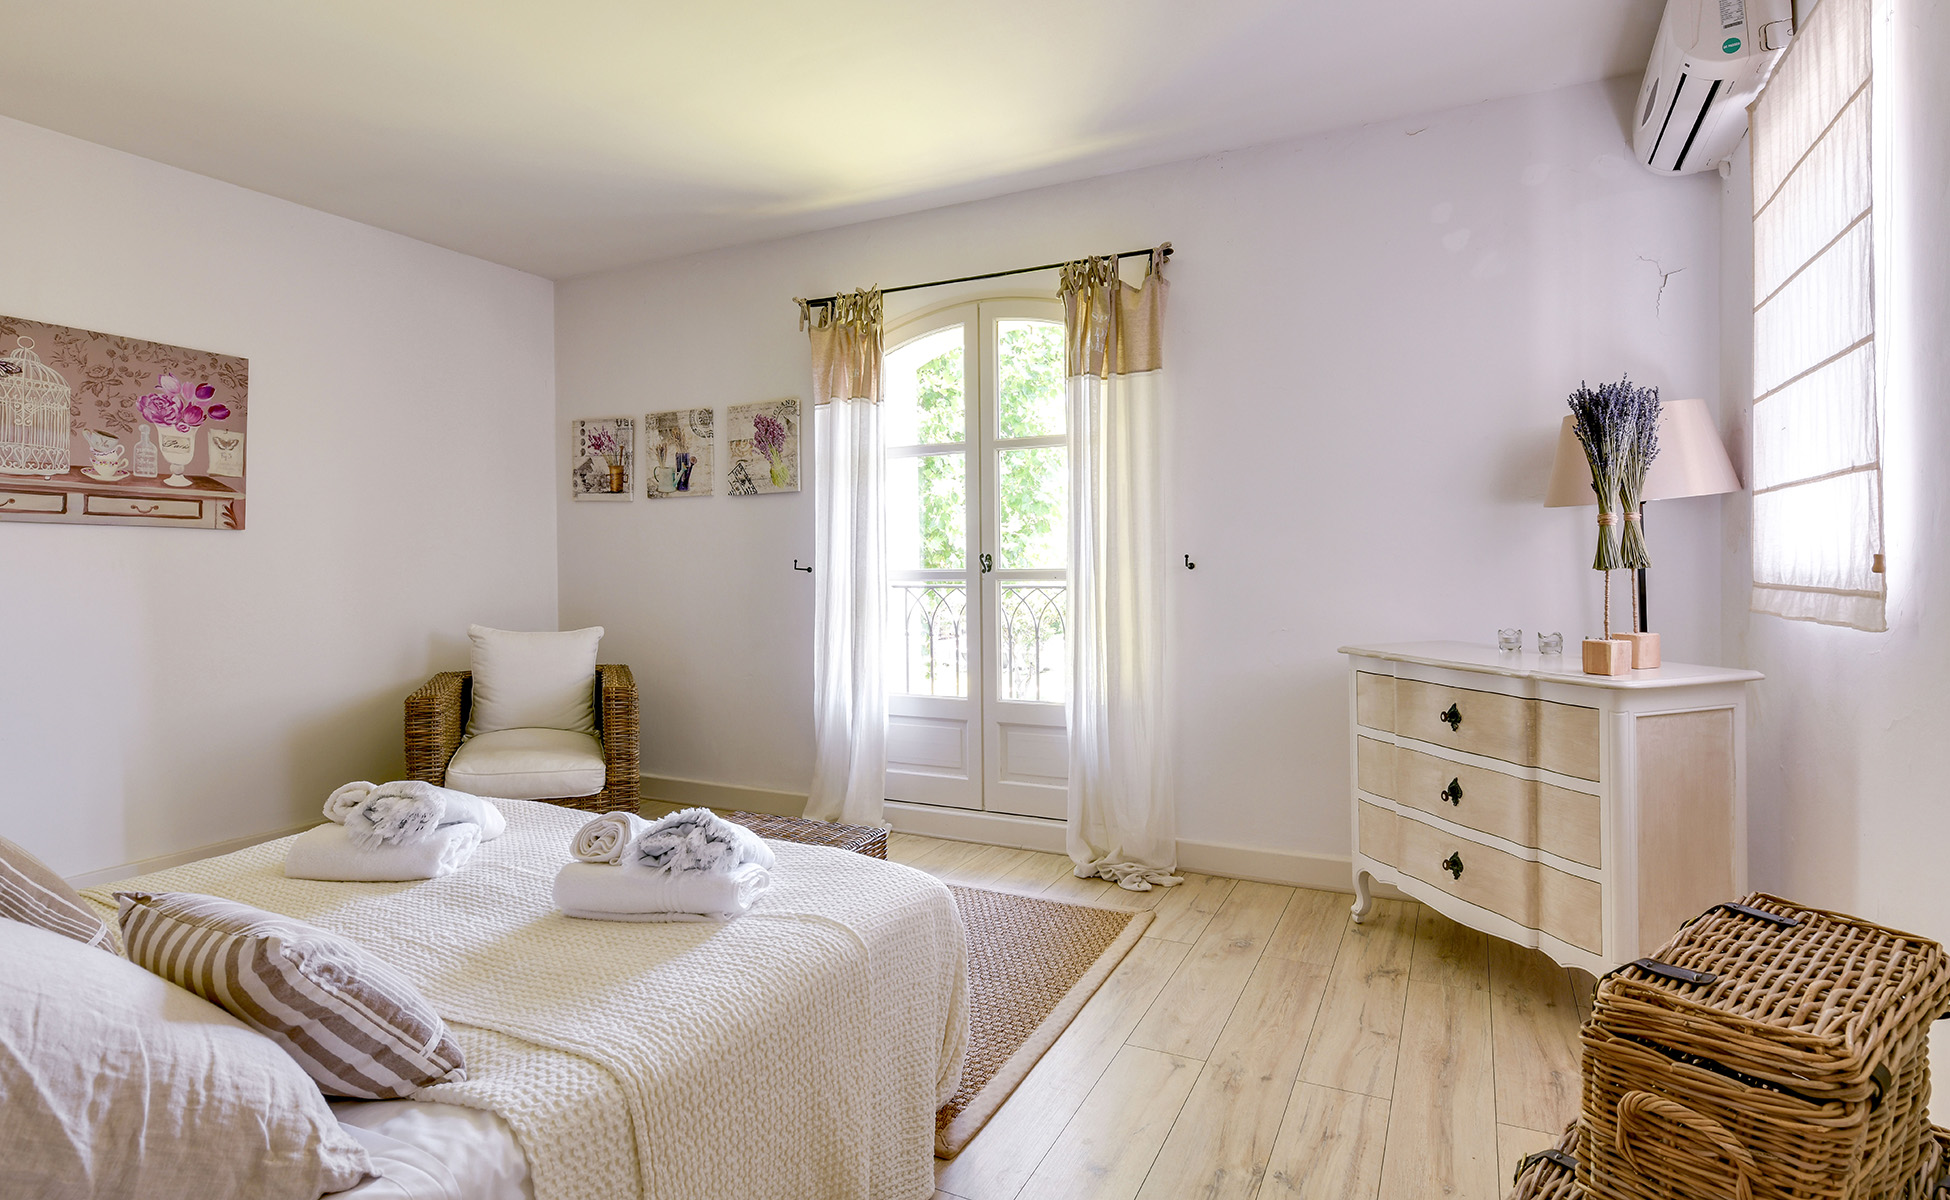 Lovelydays luxury service apartment rental - St Rémy de Provence and surroundings - Mas Ameu - Partner - 6 bedrooms - 6 bathrooms - Queen bed - 1a040532cd2e - Lovelydays